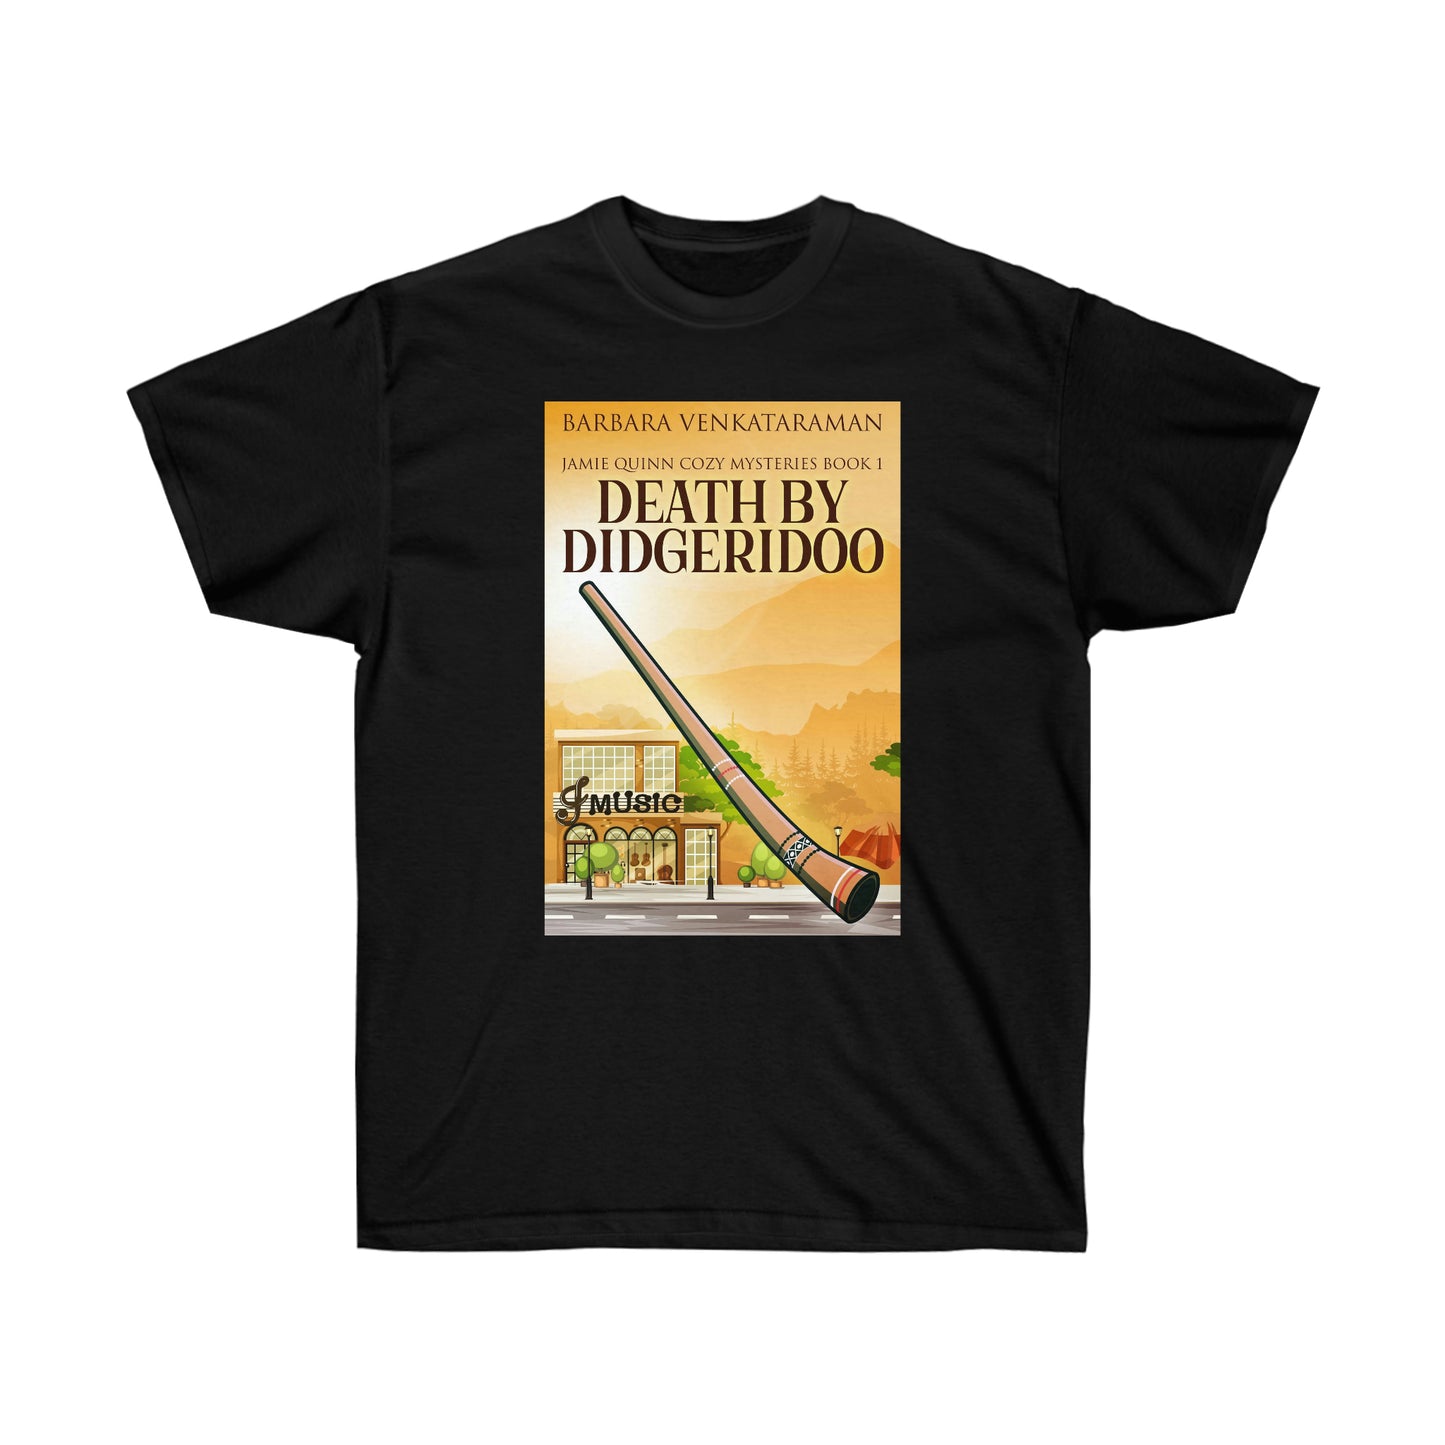 Death By Didgeridoo - Unisex T-Shirt